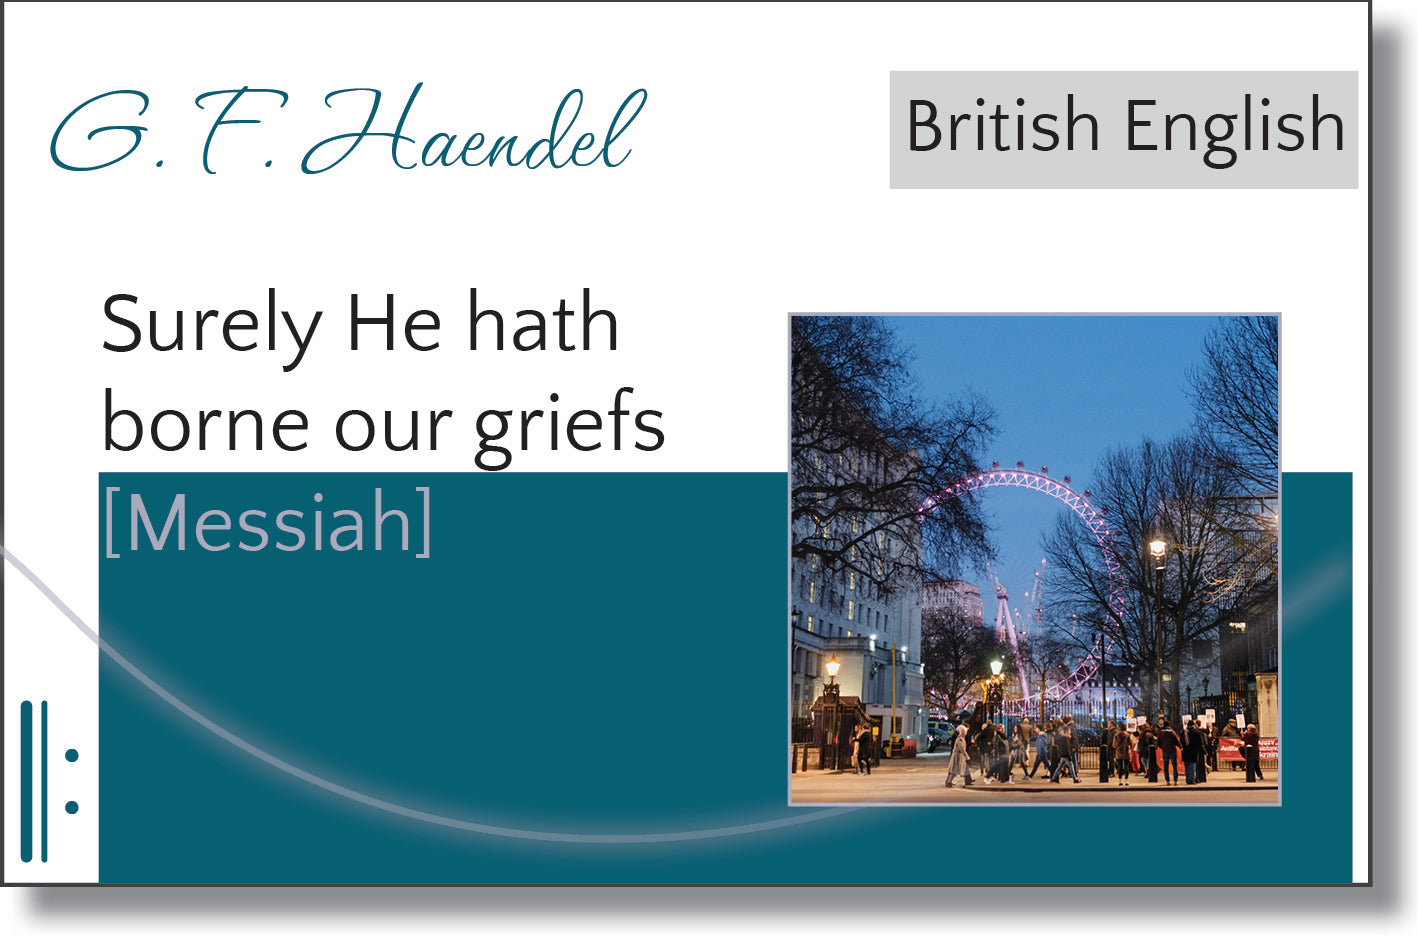 Messiah - Surely He hath borne our griefs